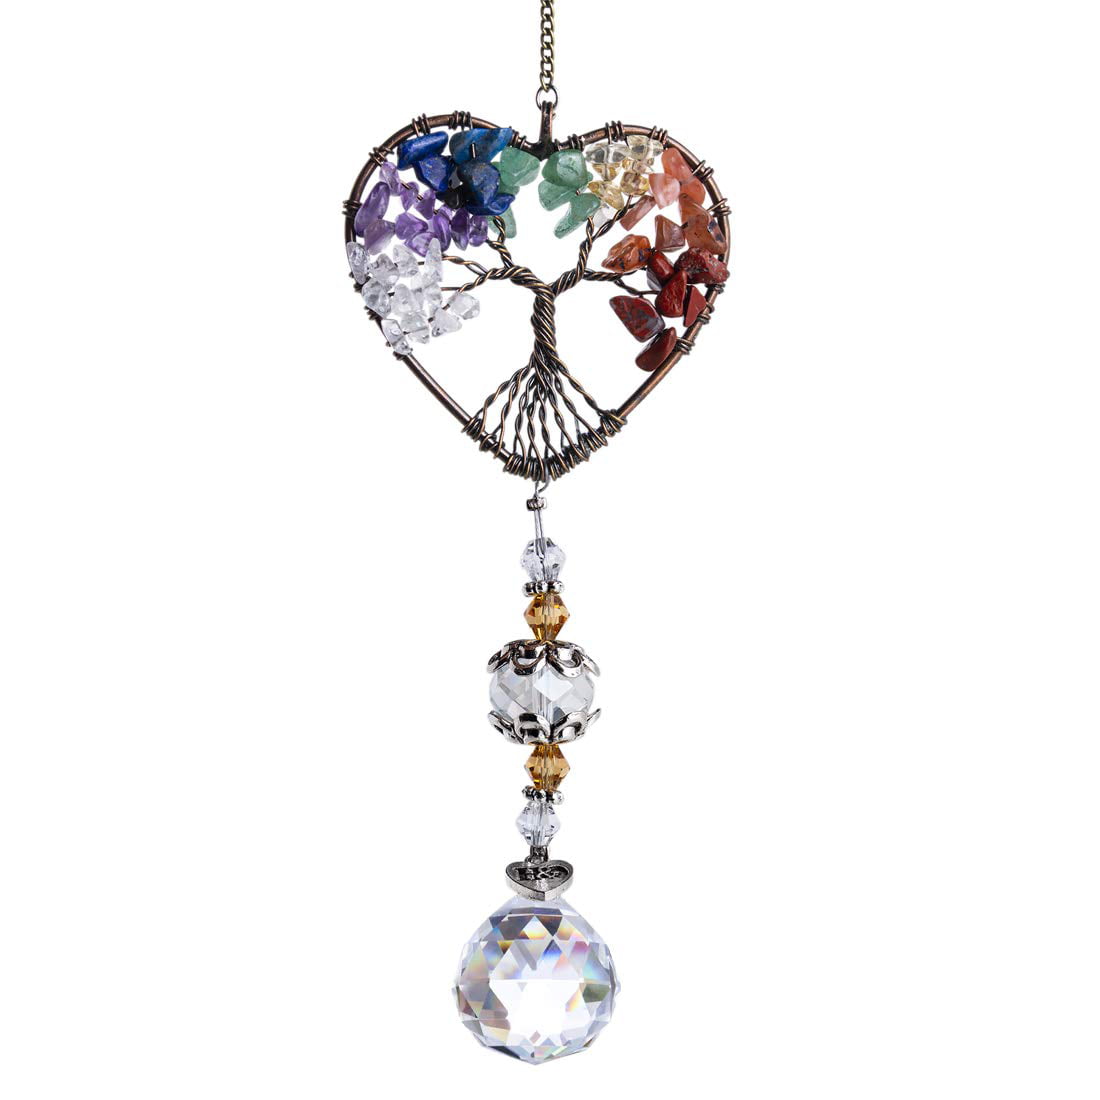 H&D HYALINE & DORA Glass Wind Chime with Ball Prisms Suncatcher Crystal Pendant In-door Garden Hanging Ornament 